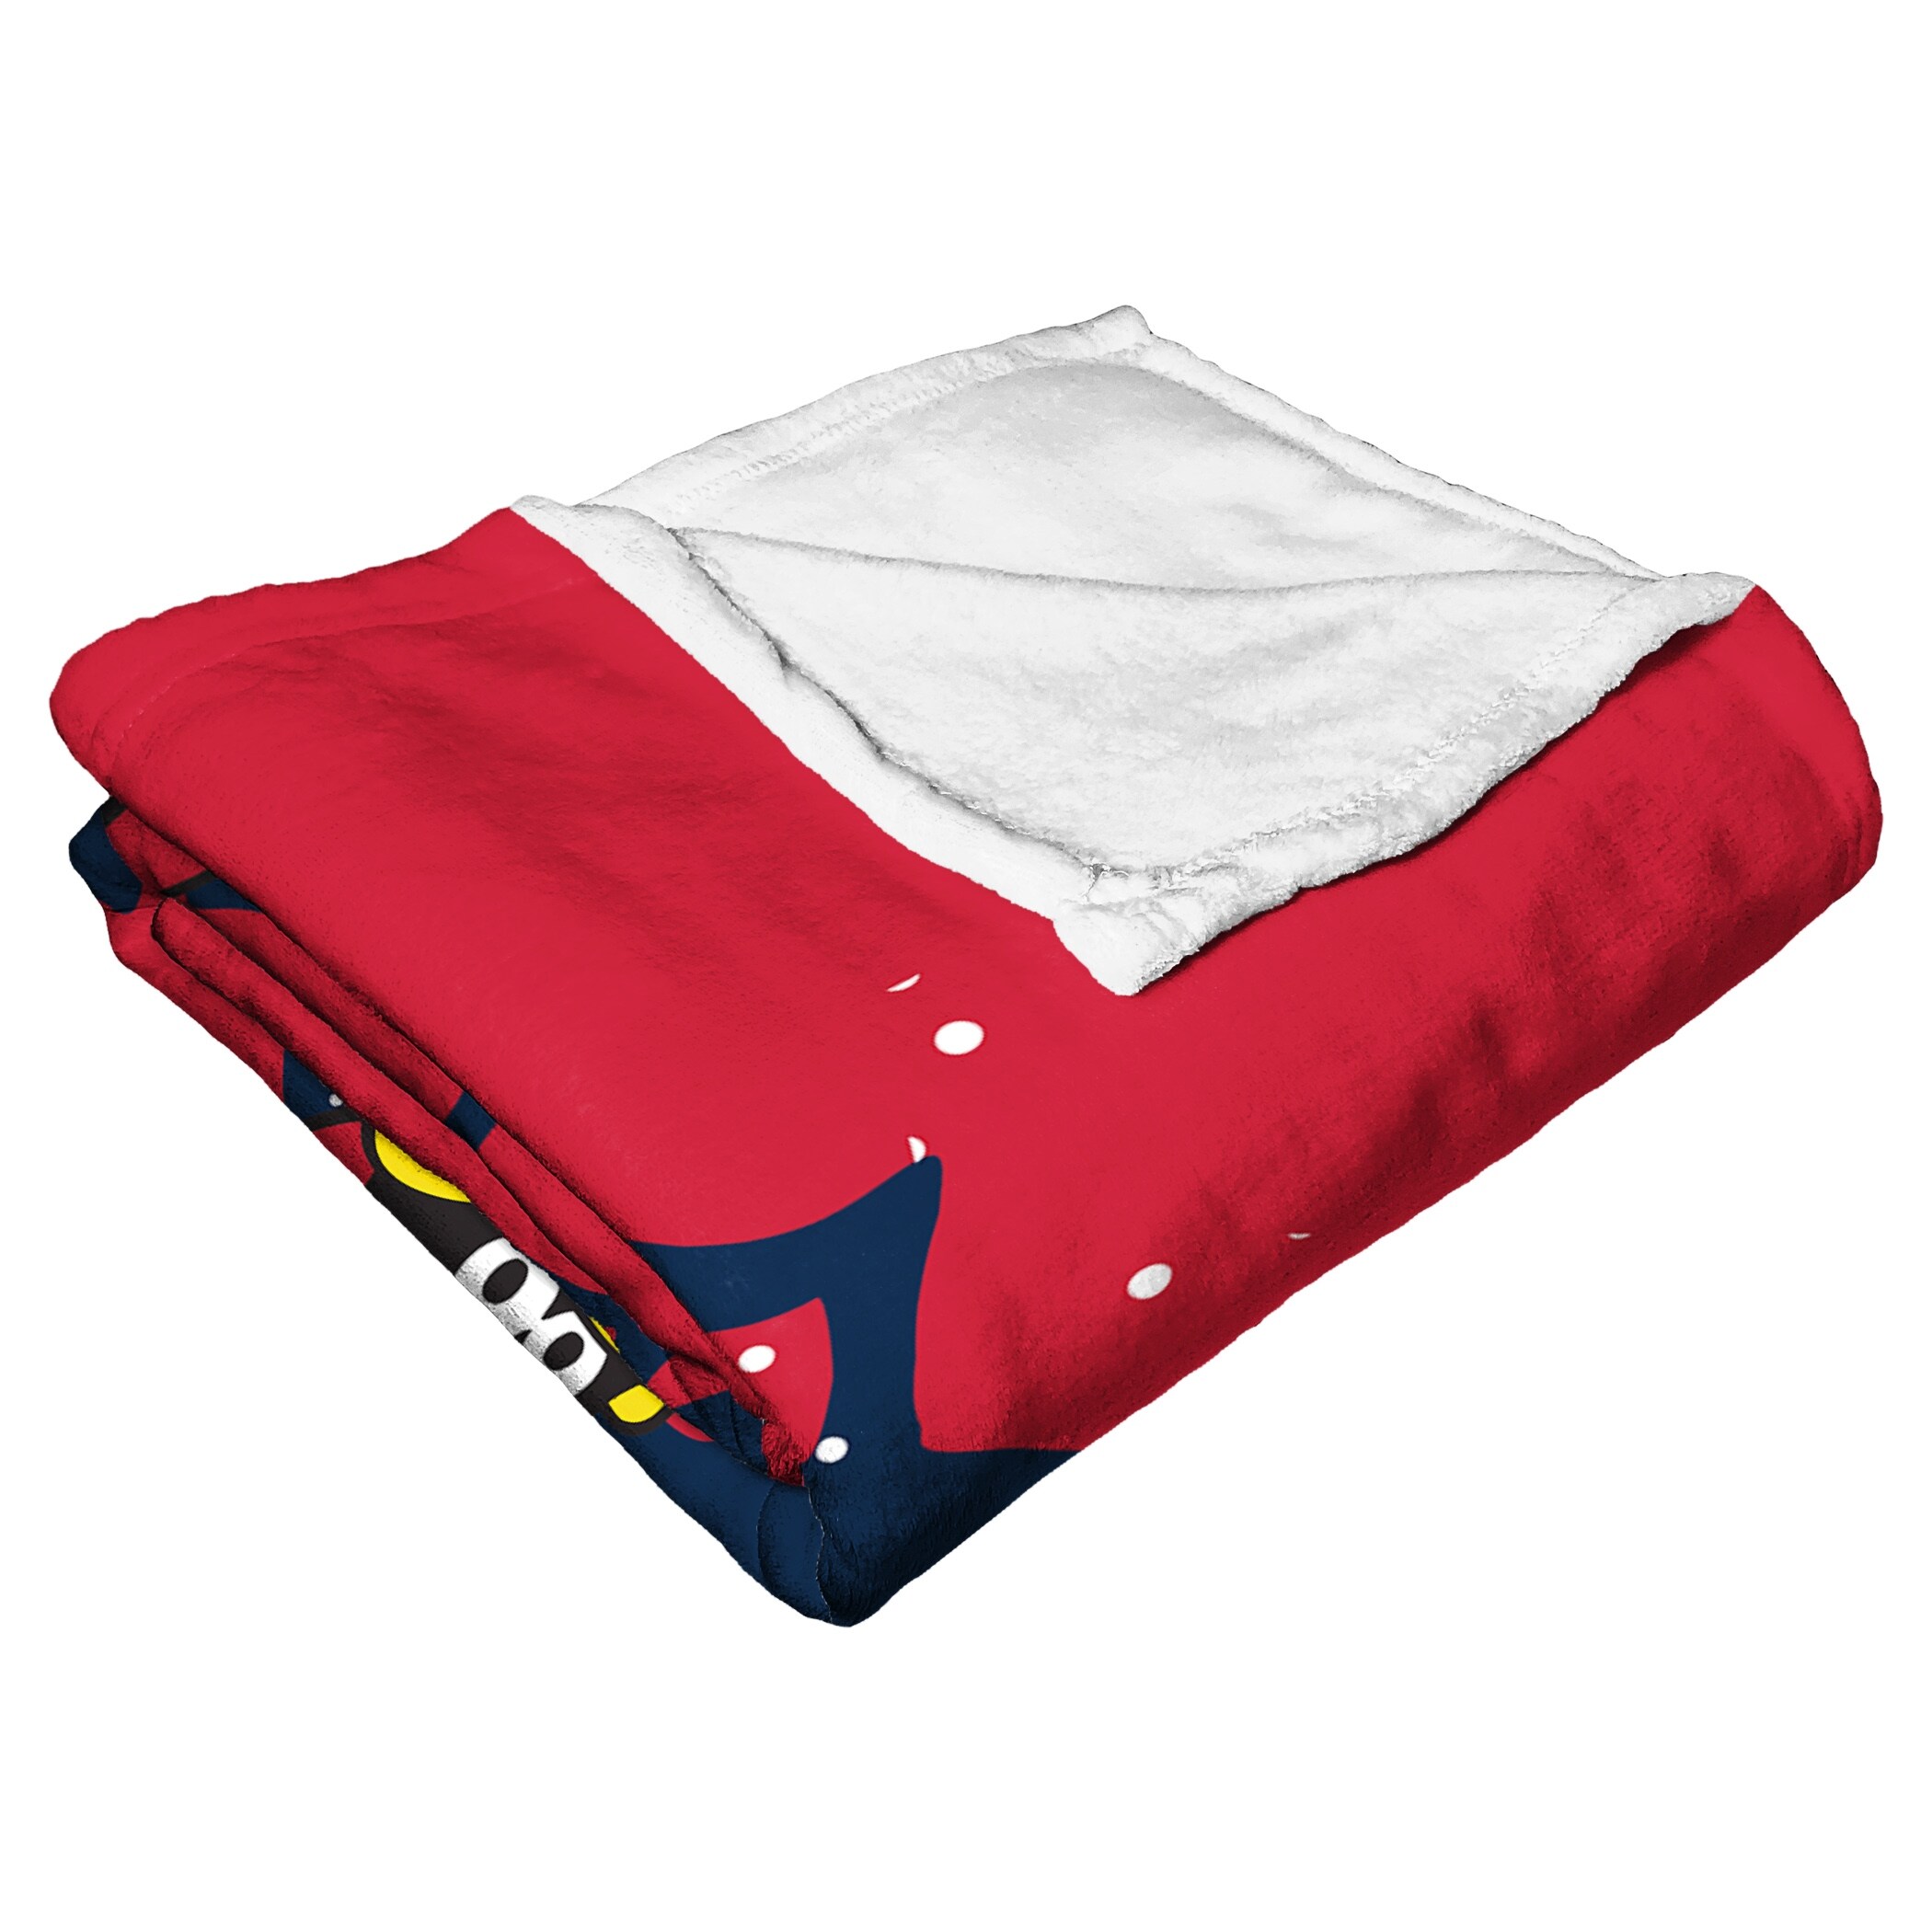 St. Louis Cardinals Bedding & Blankets in St. Louis Cardinals Team